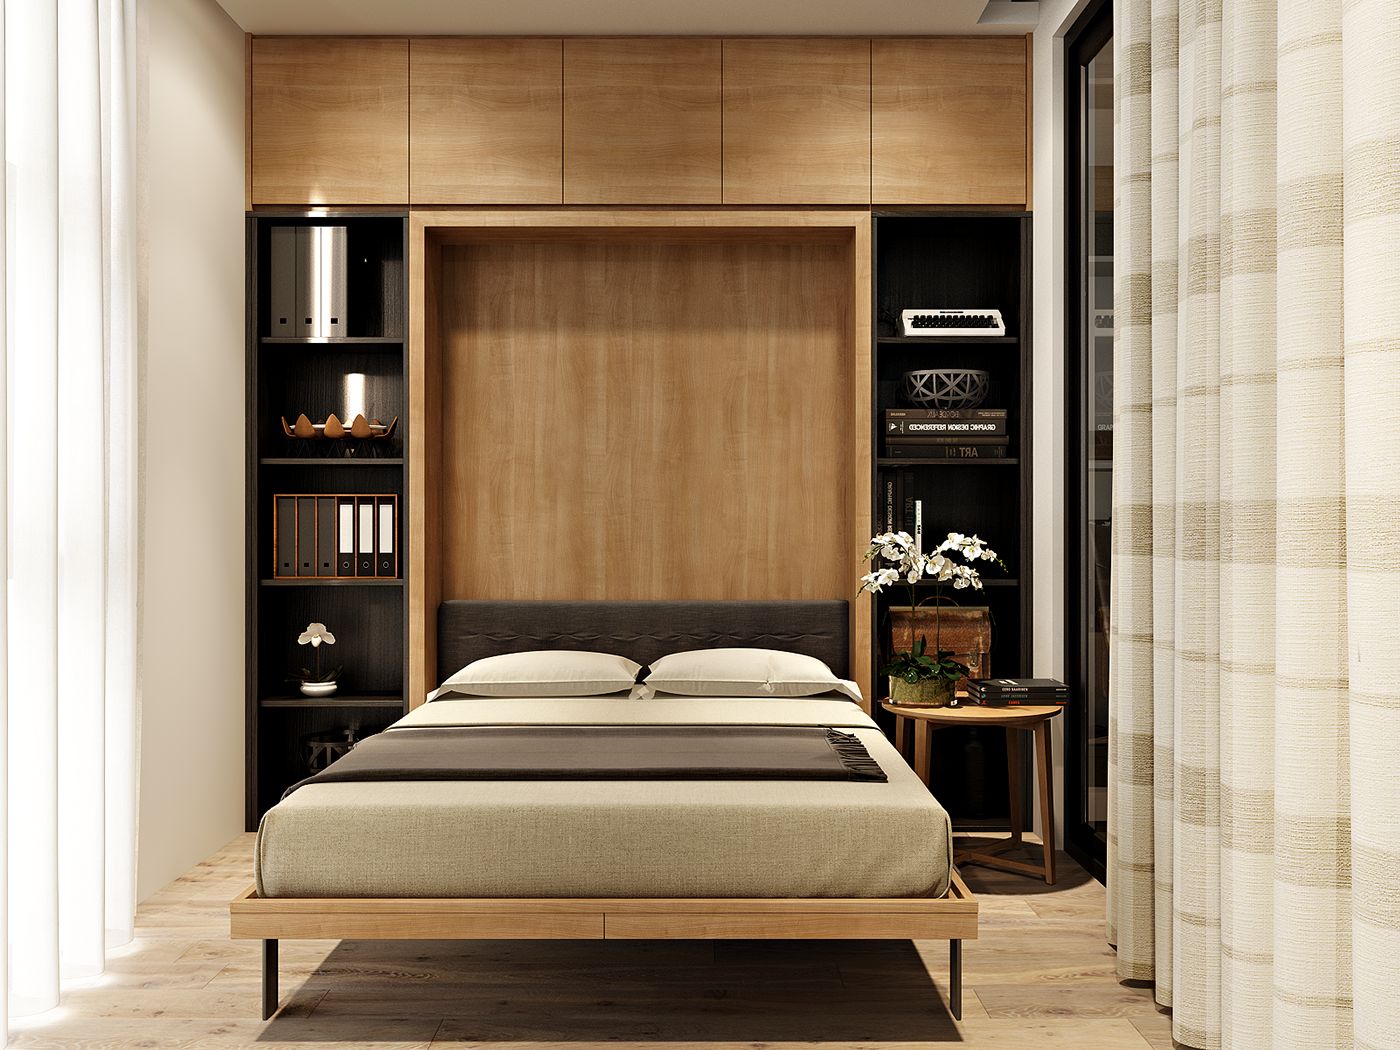 muprhy-bed-modest-sized-bedroom-shevles-min